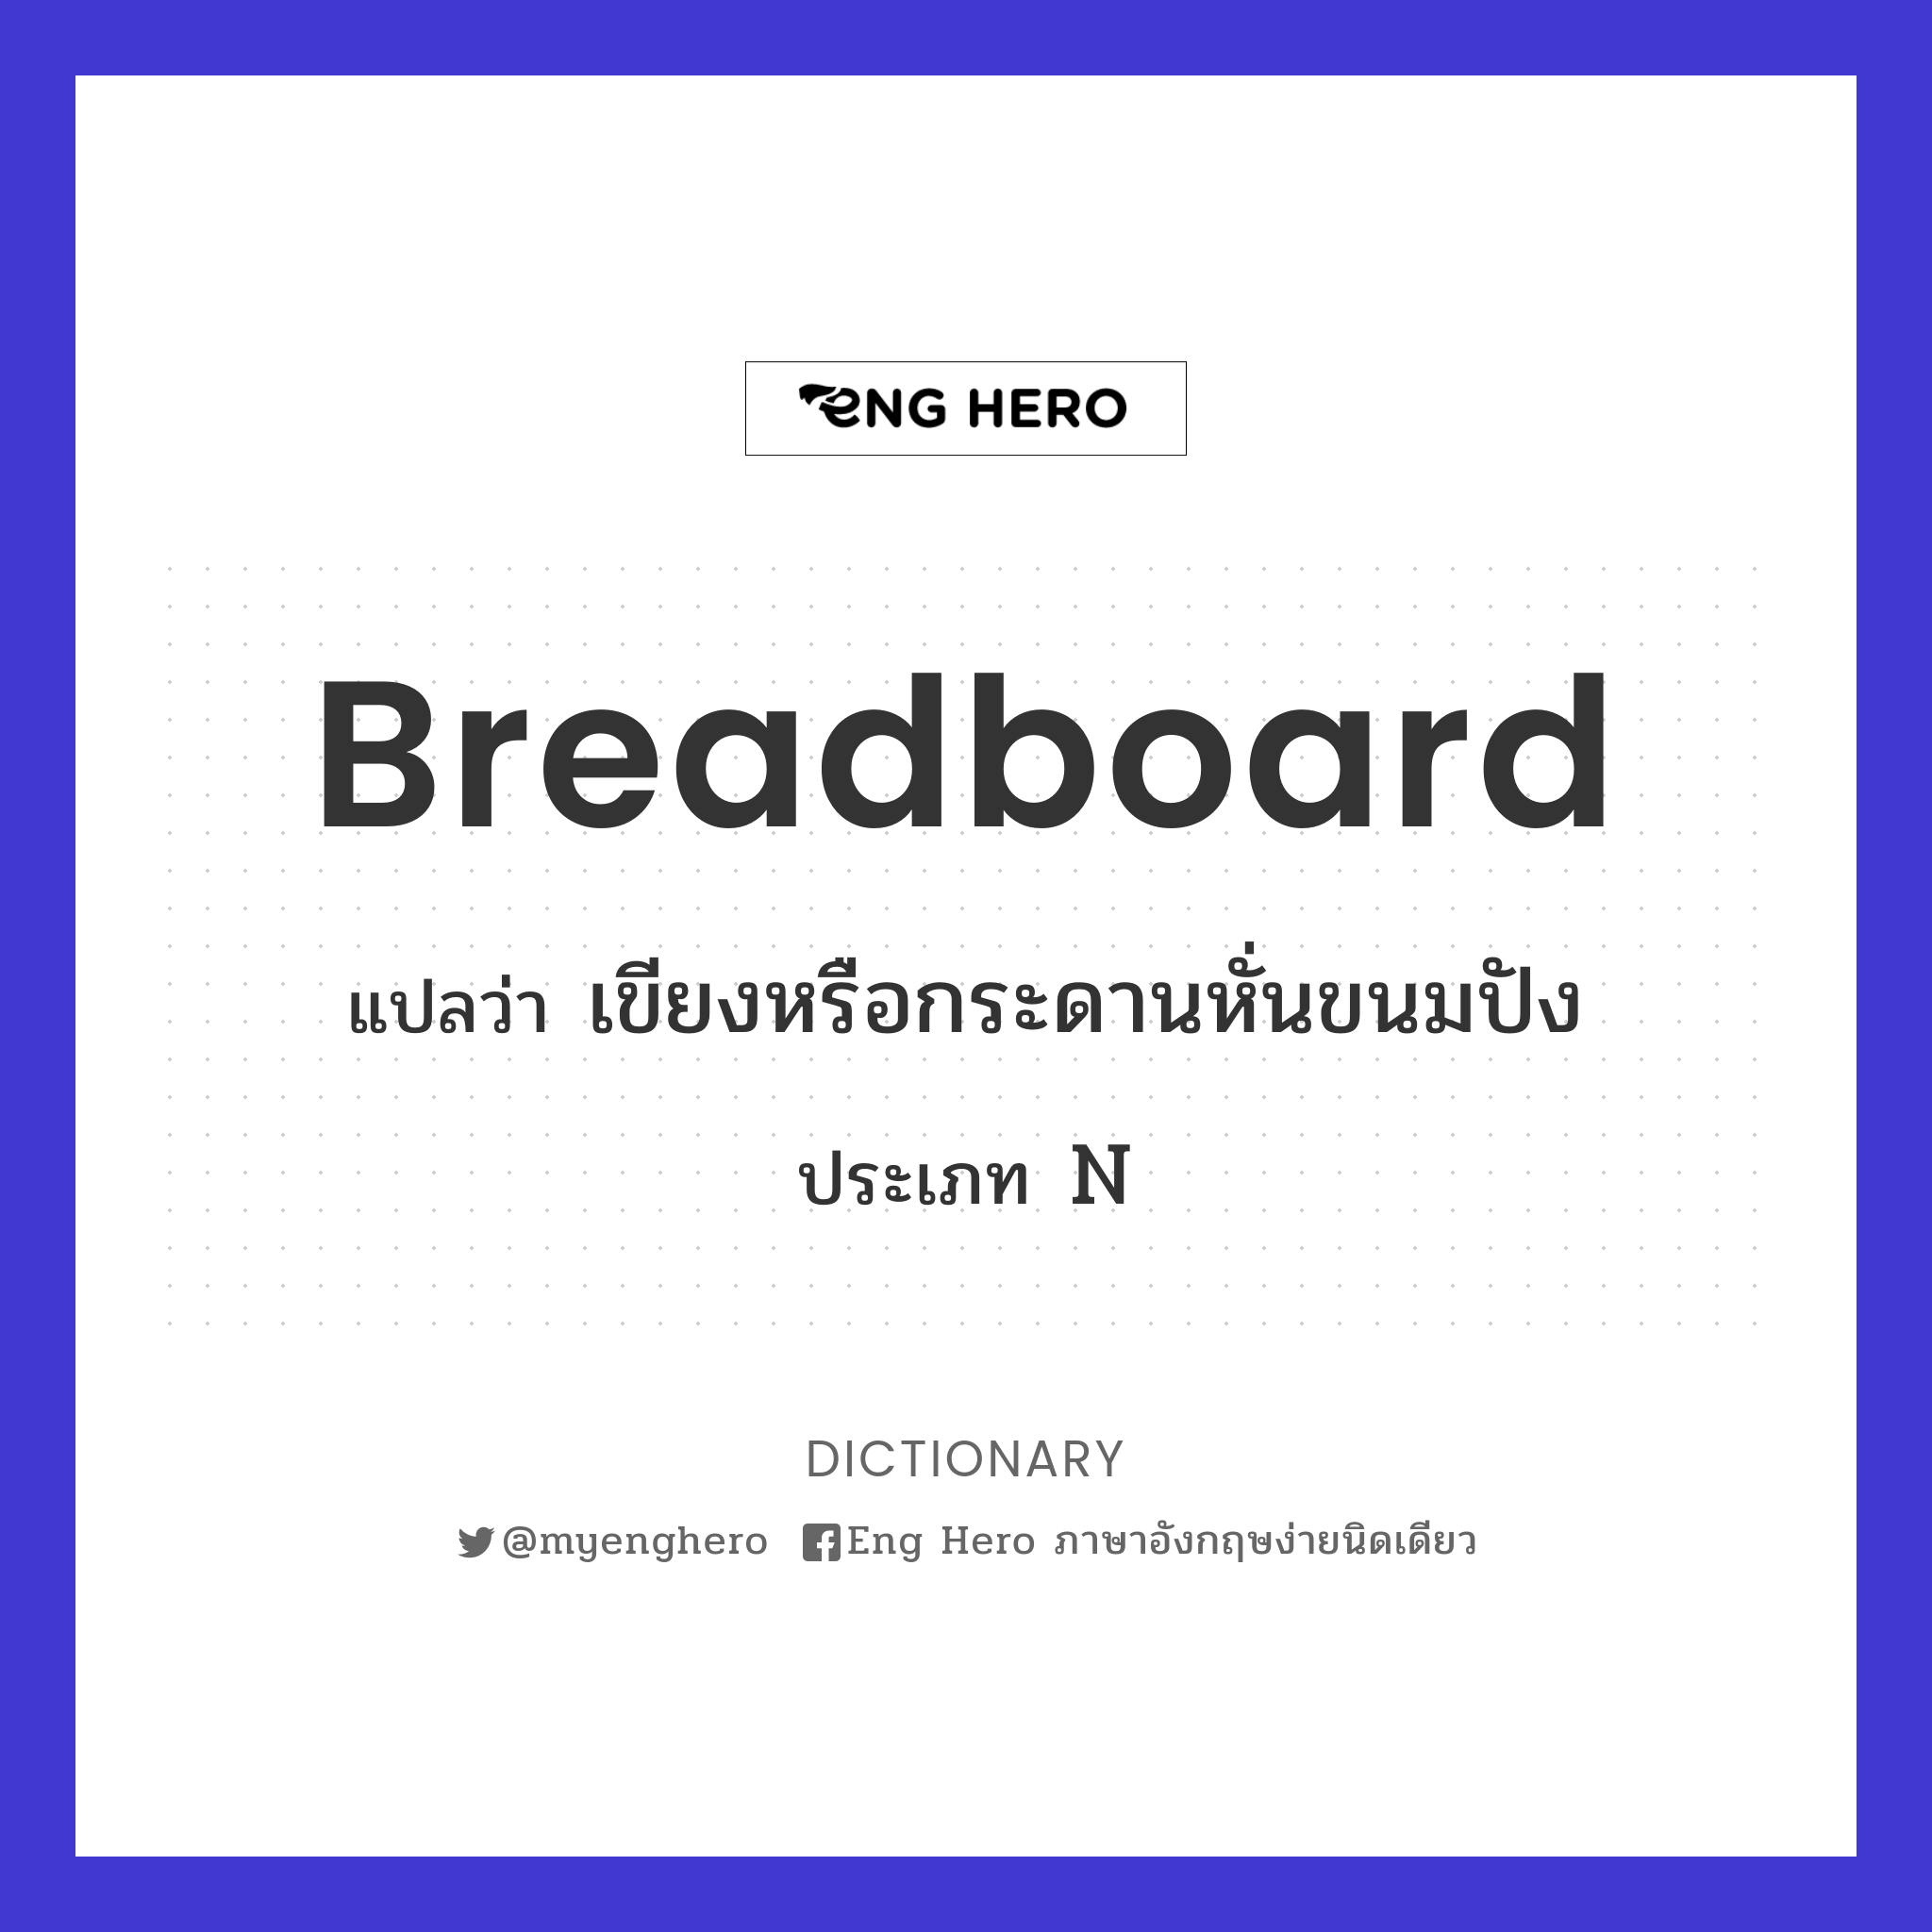 breadboard